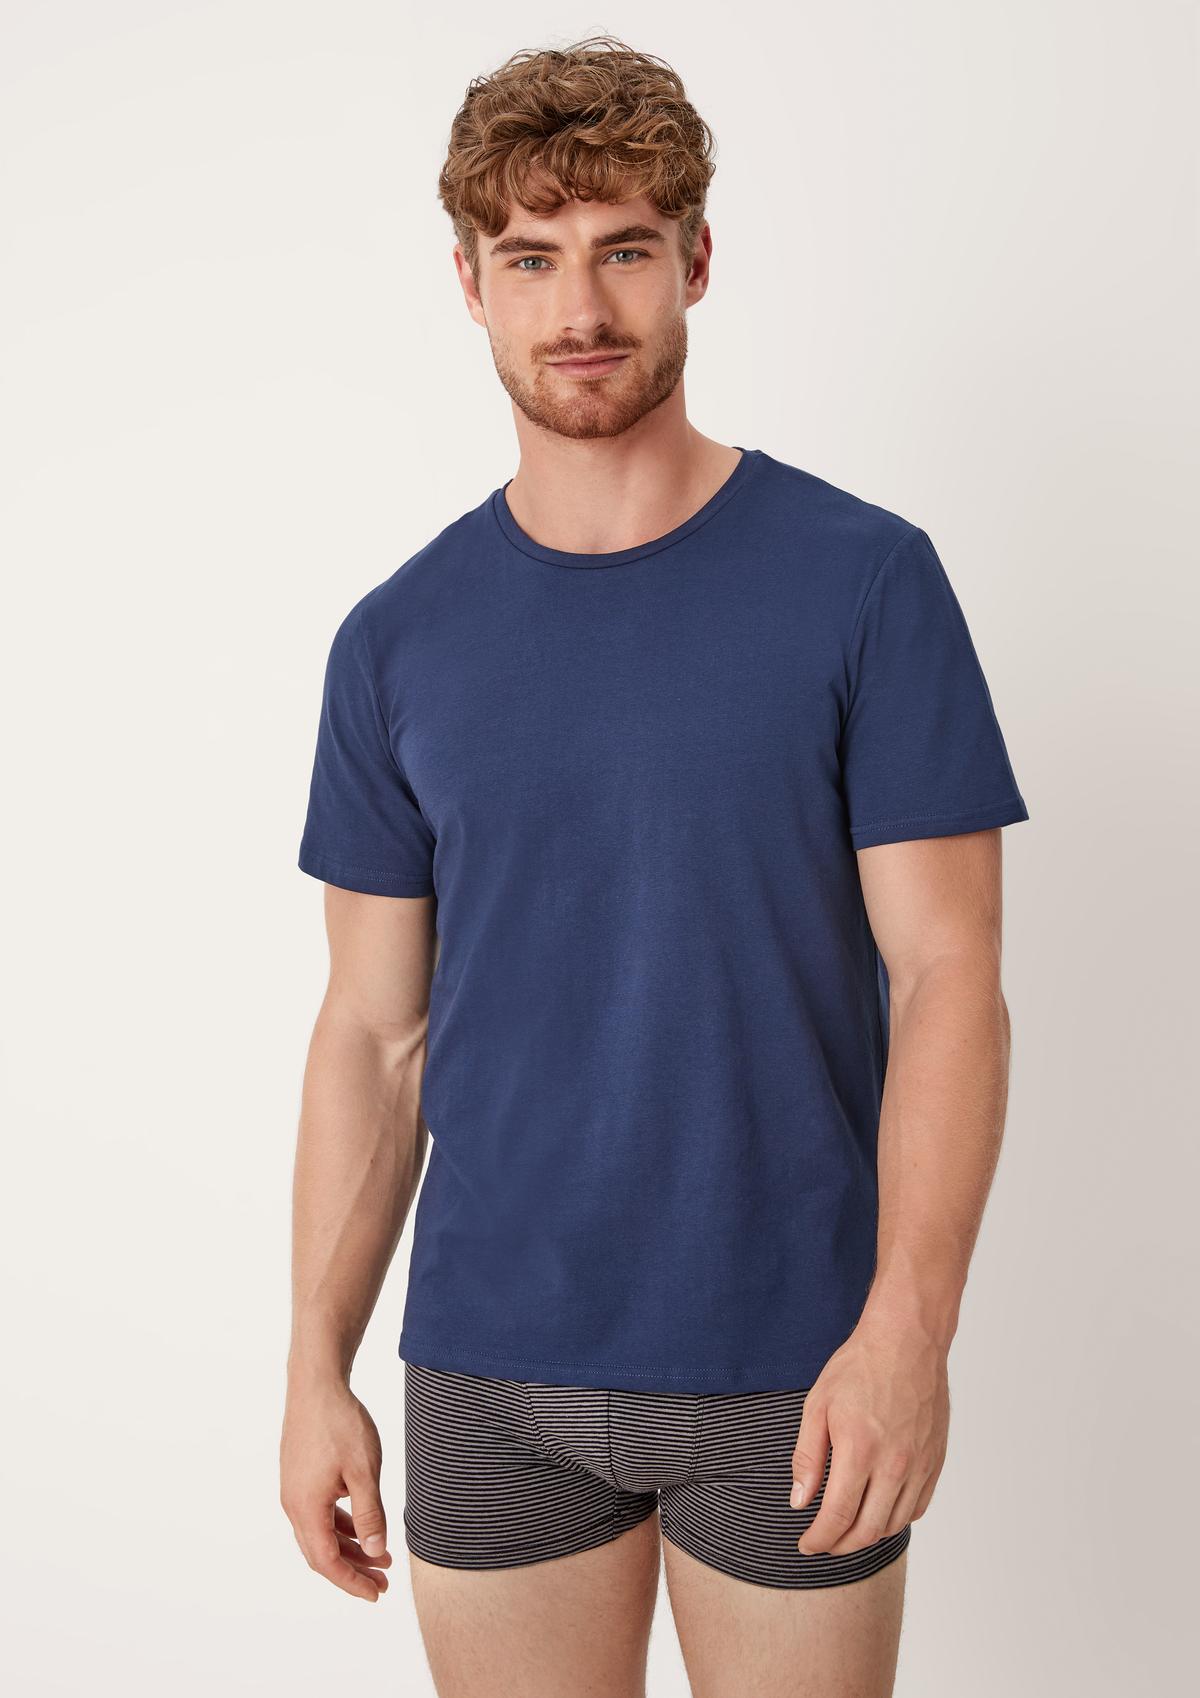 s.Oliver Set van 2 basic shirts